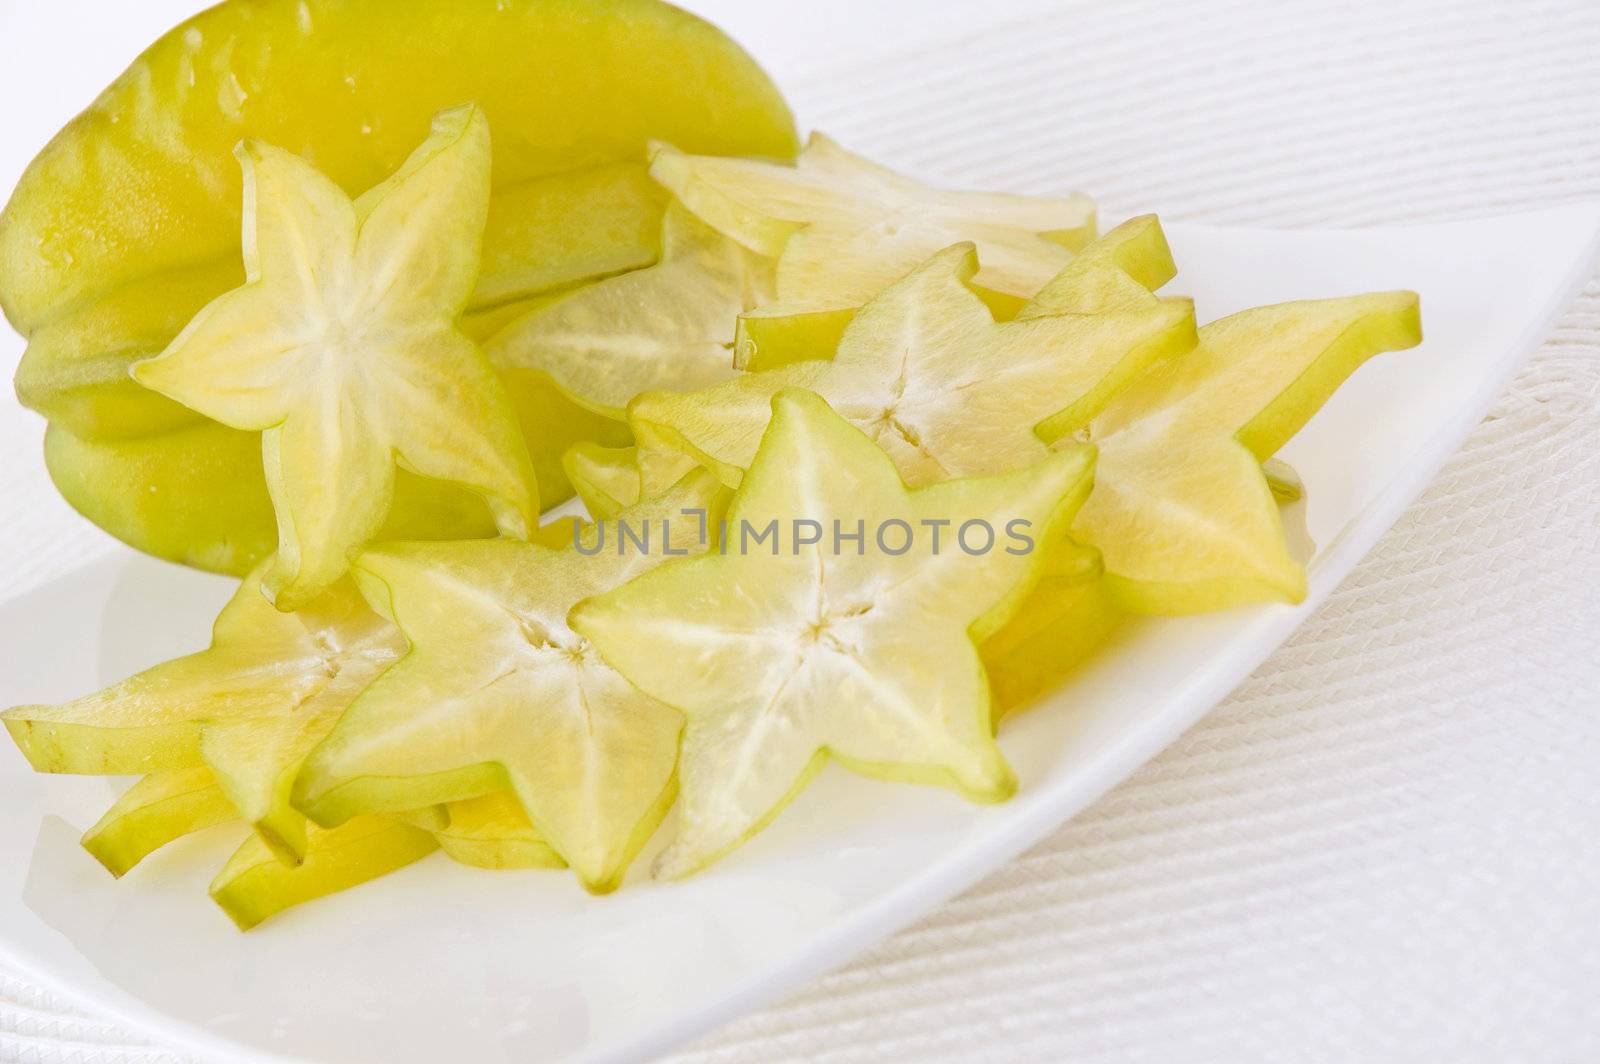 fresh starfruit on plate by daniaphoto